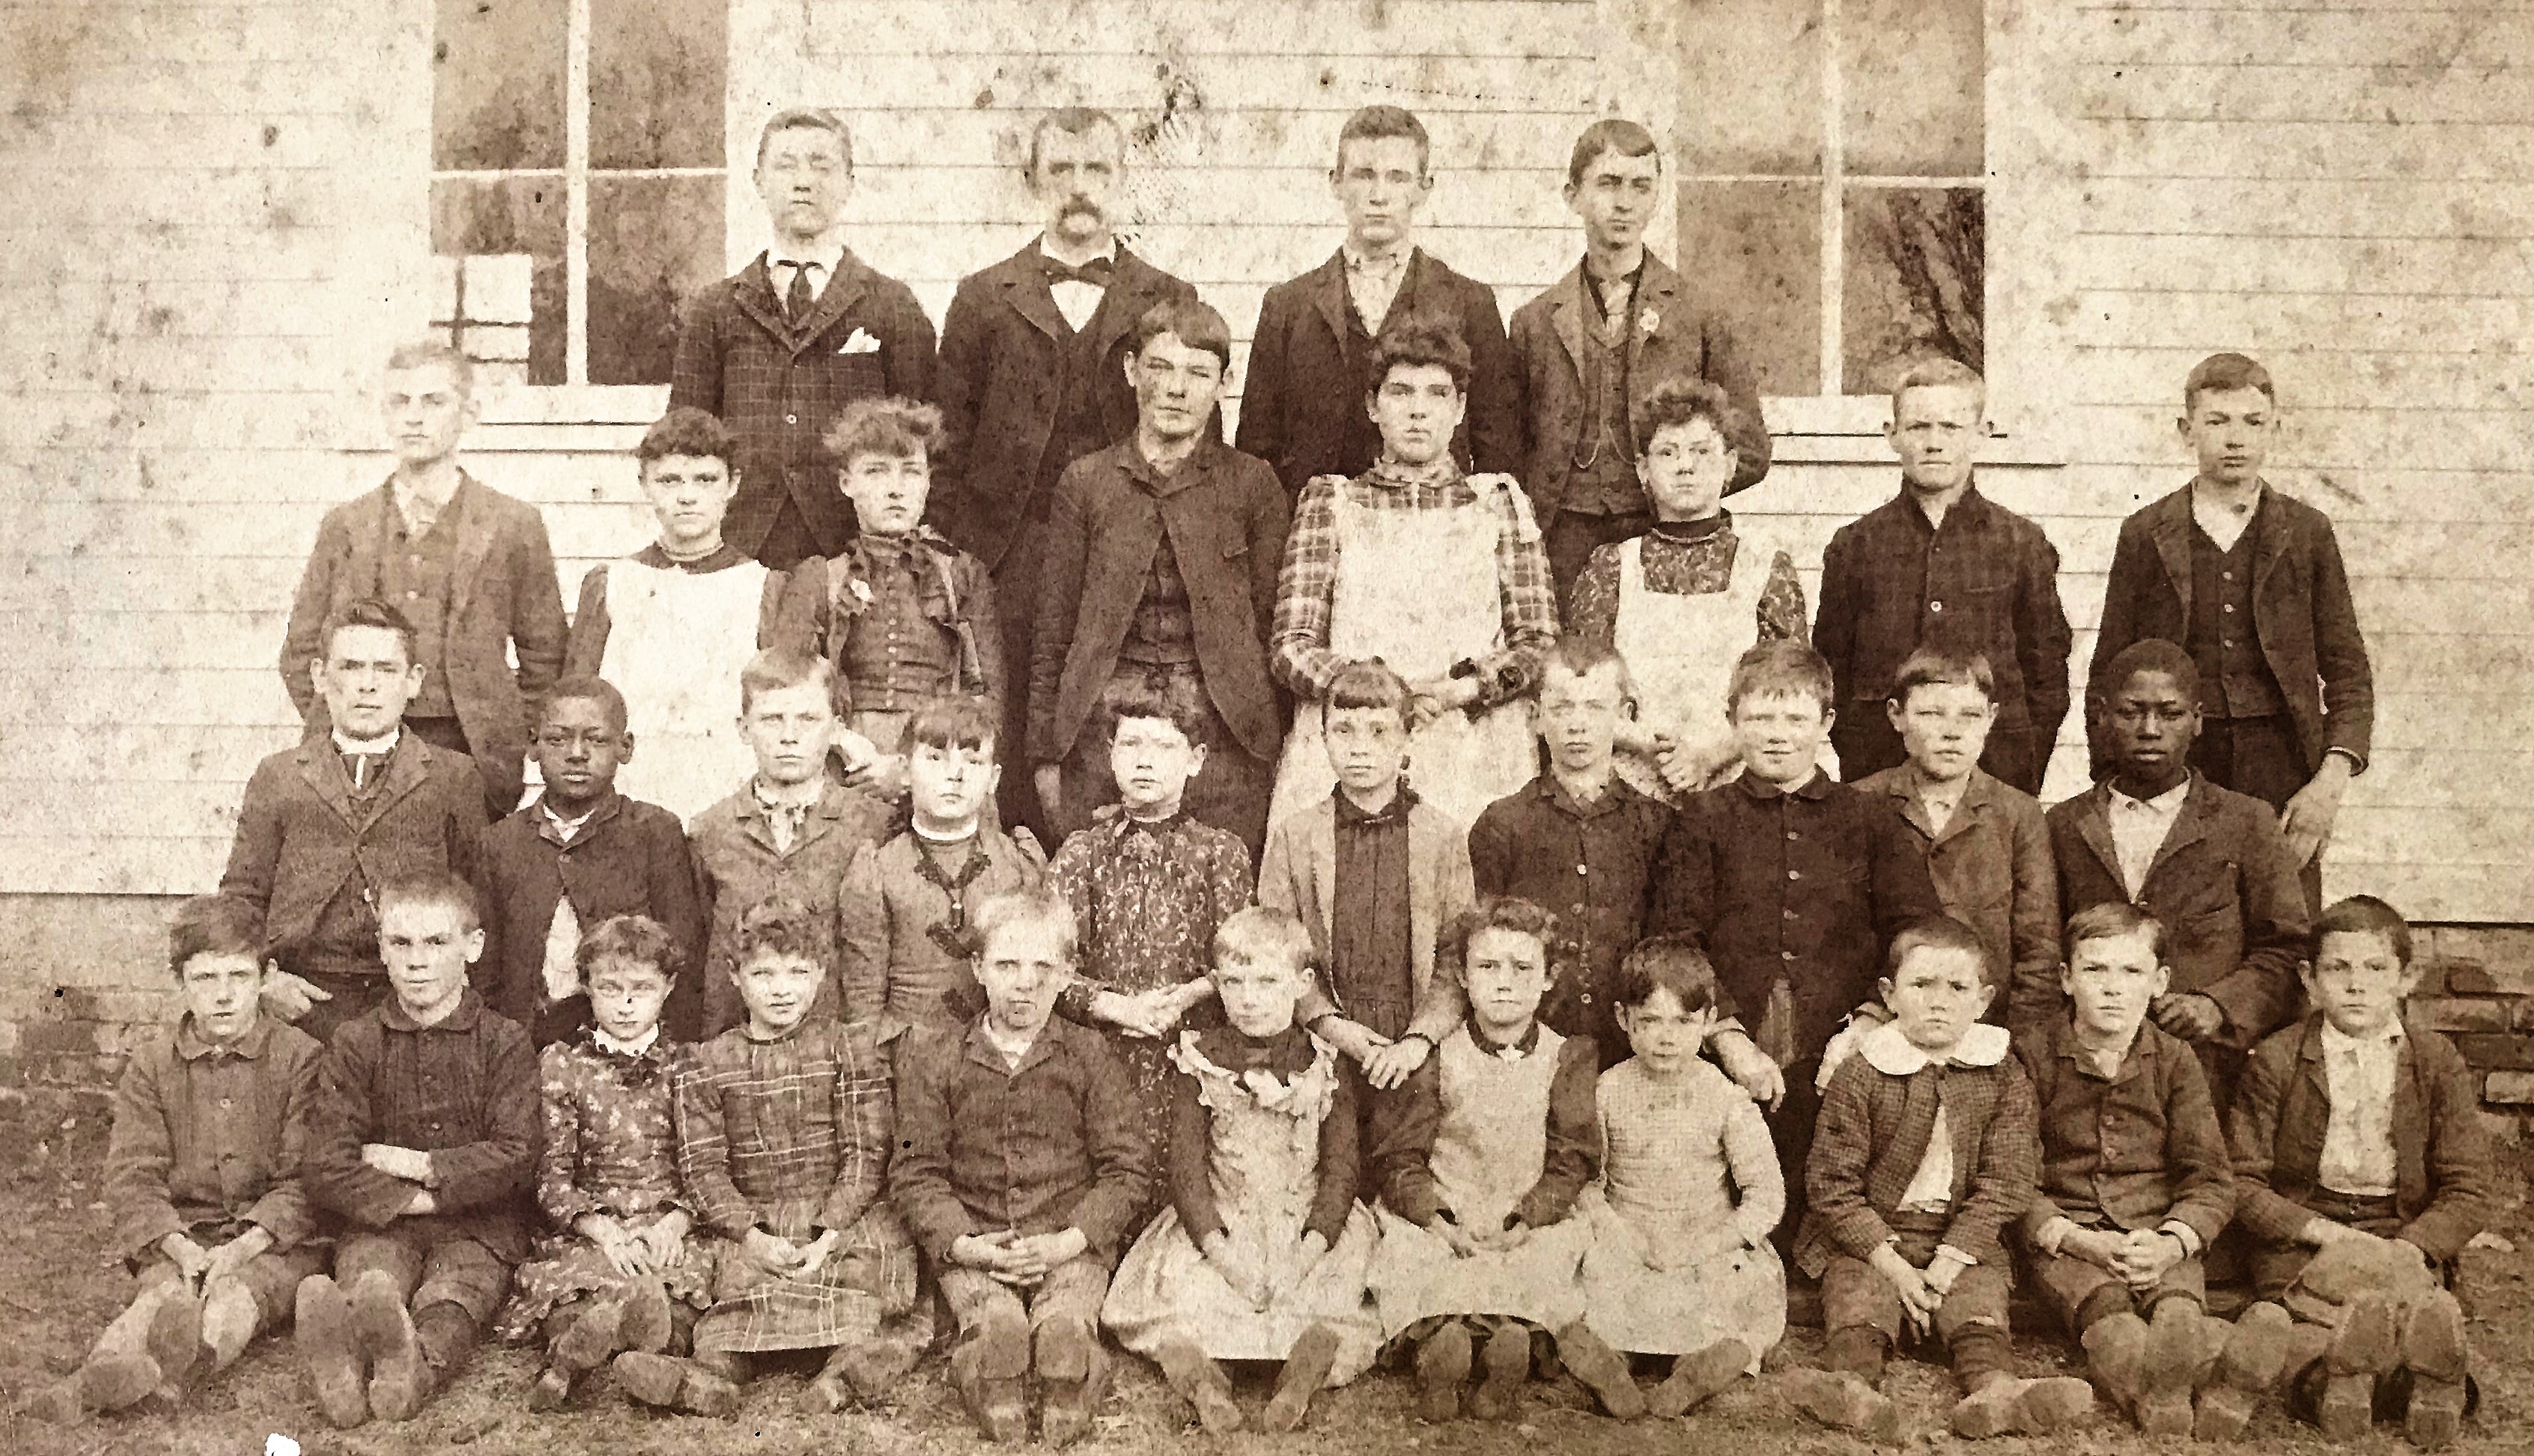 Farmers Institute Area Children circa 1900